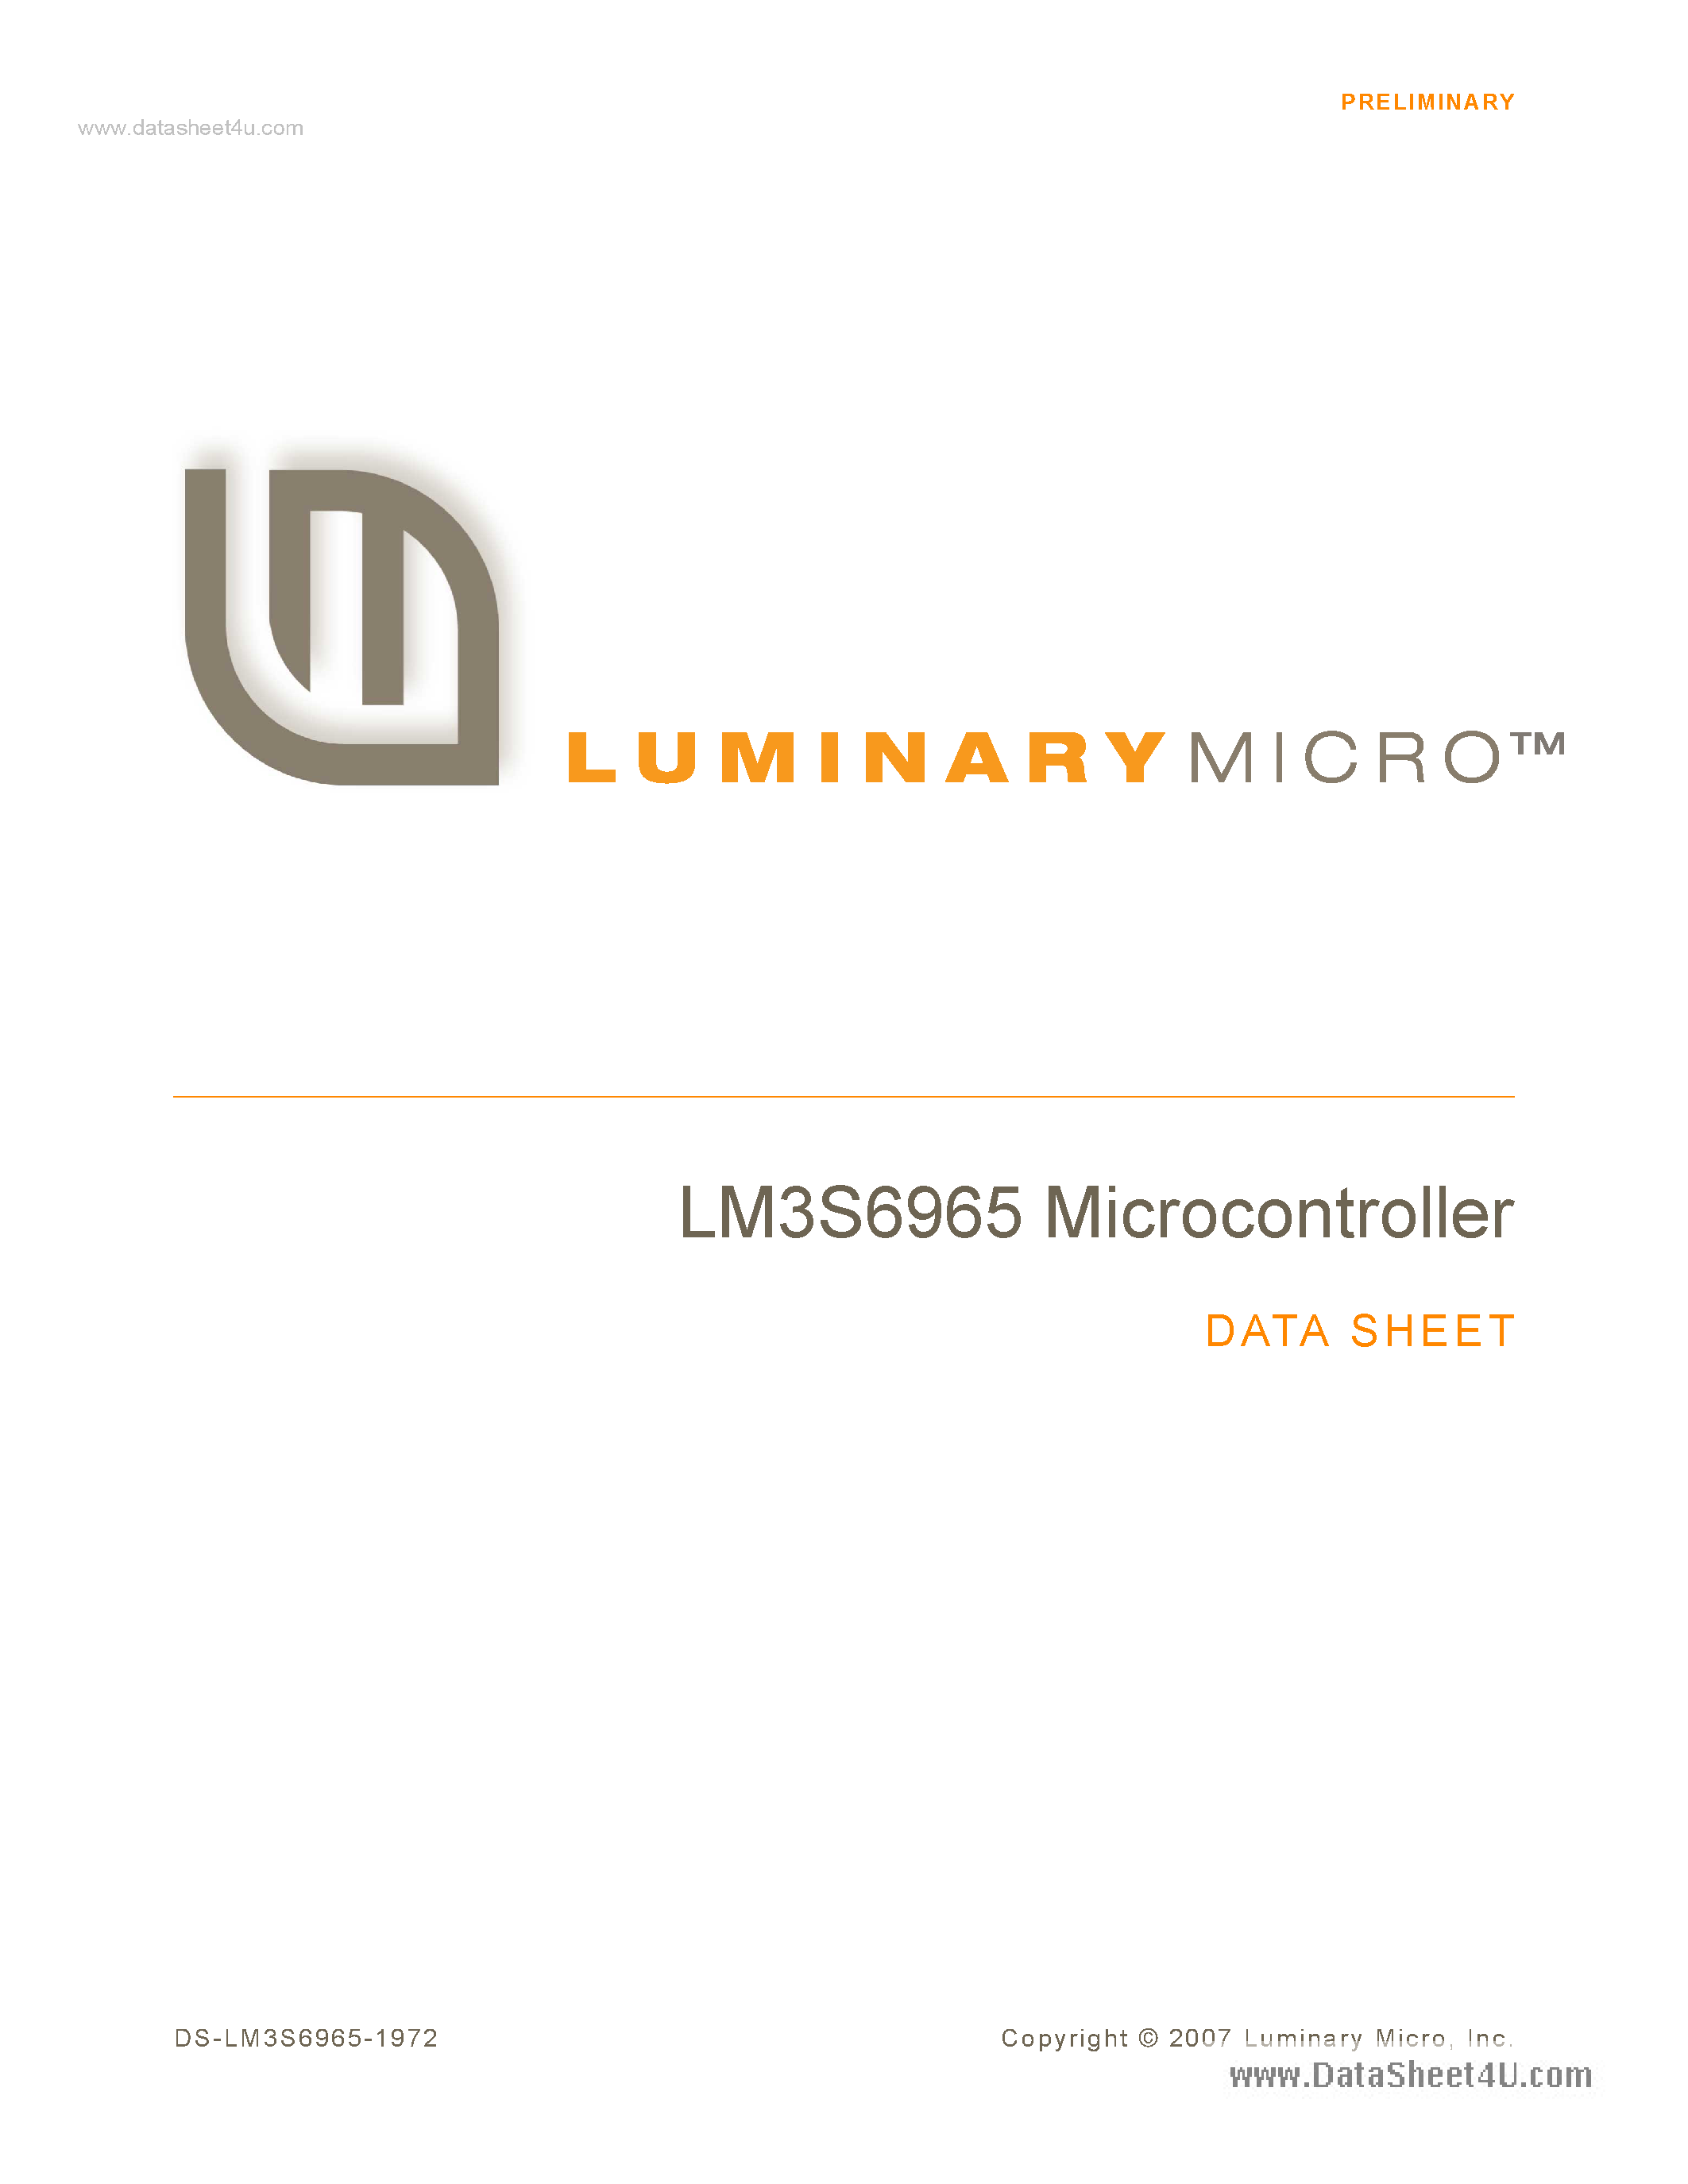 Даташит LM3S6965 - Microcontroller страница 1